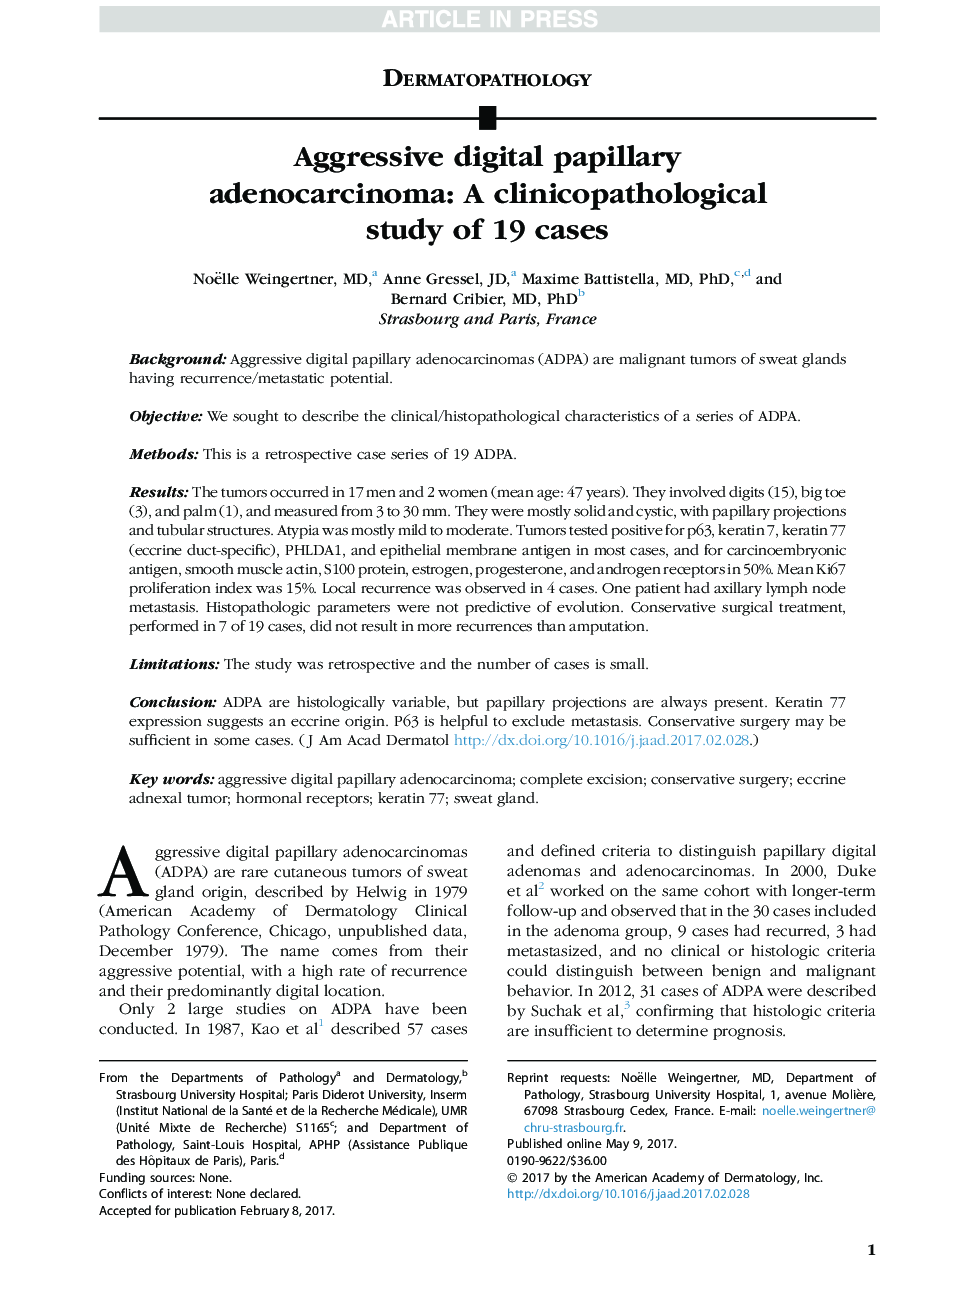 Aggressive digital papillary adenocarcinoma: A clinicopathological study of 19 cases